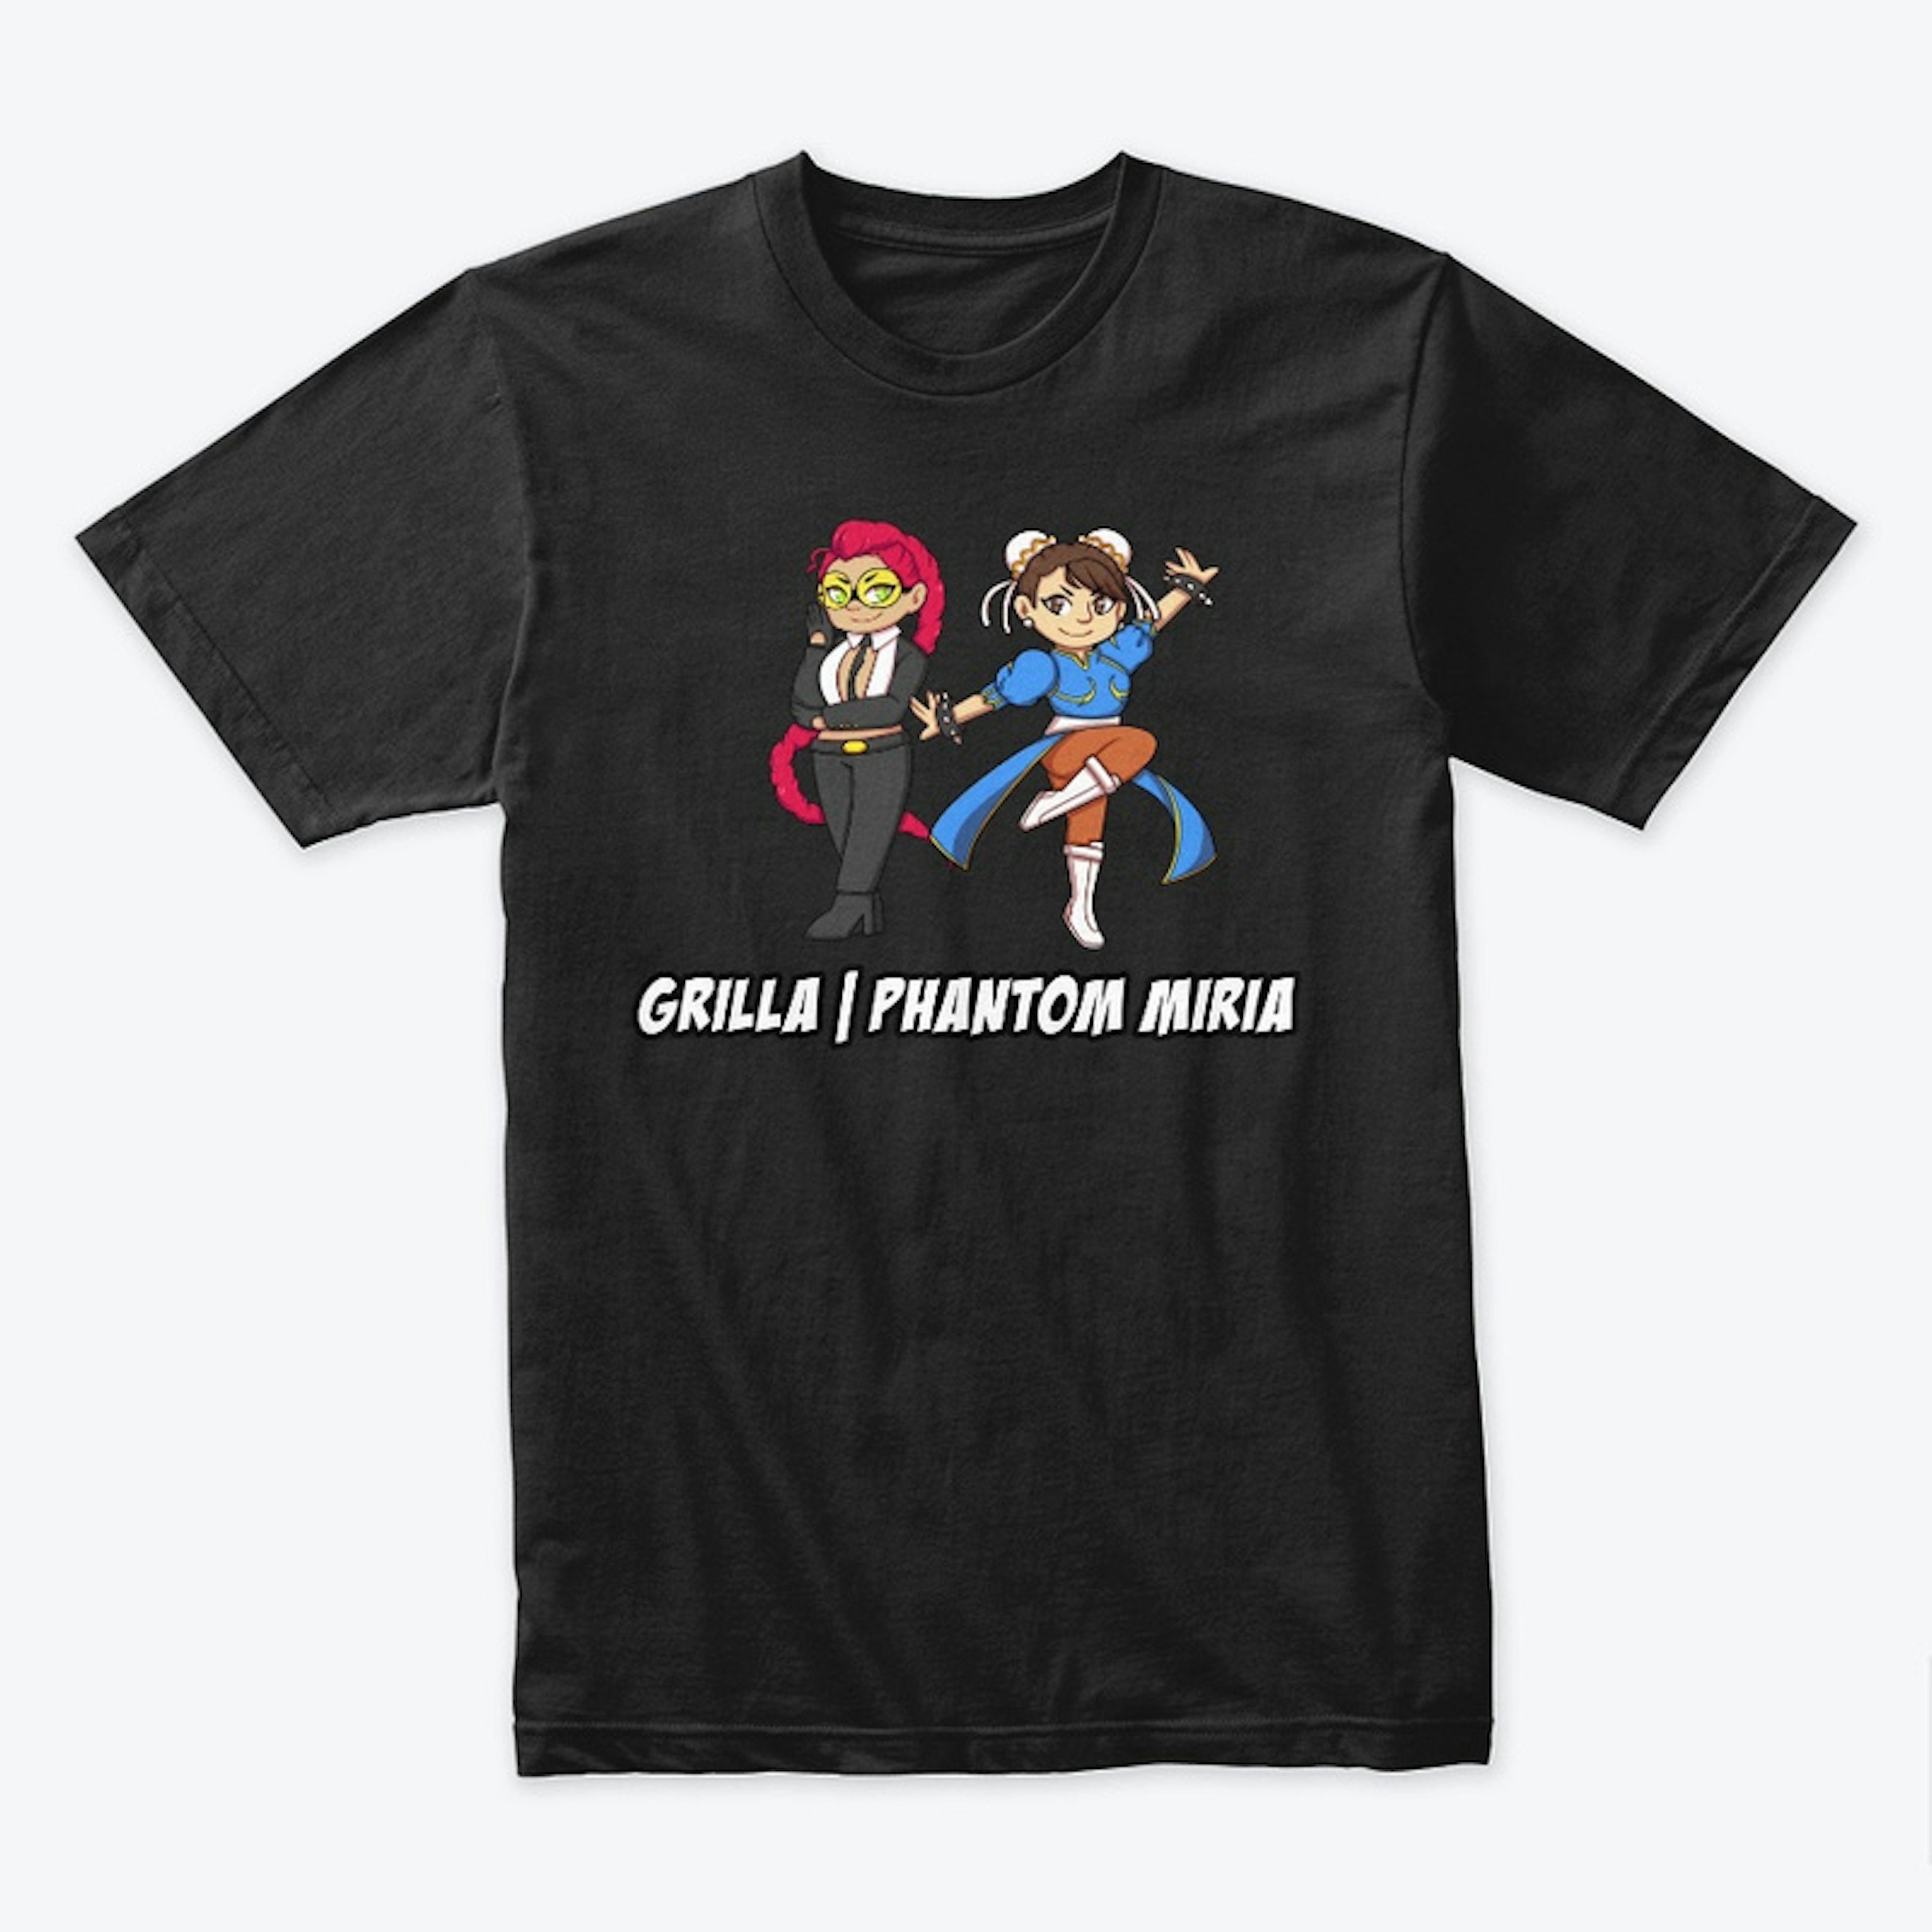 Grilla Phantom Miria